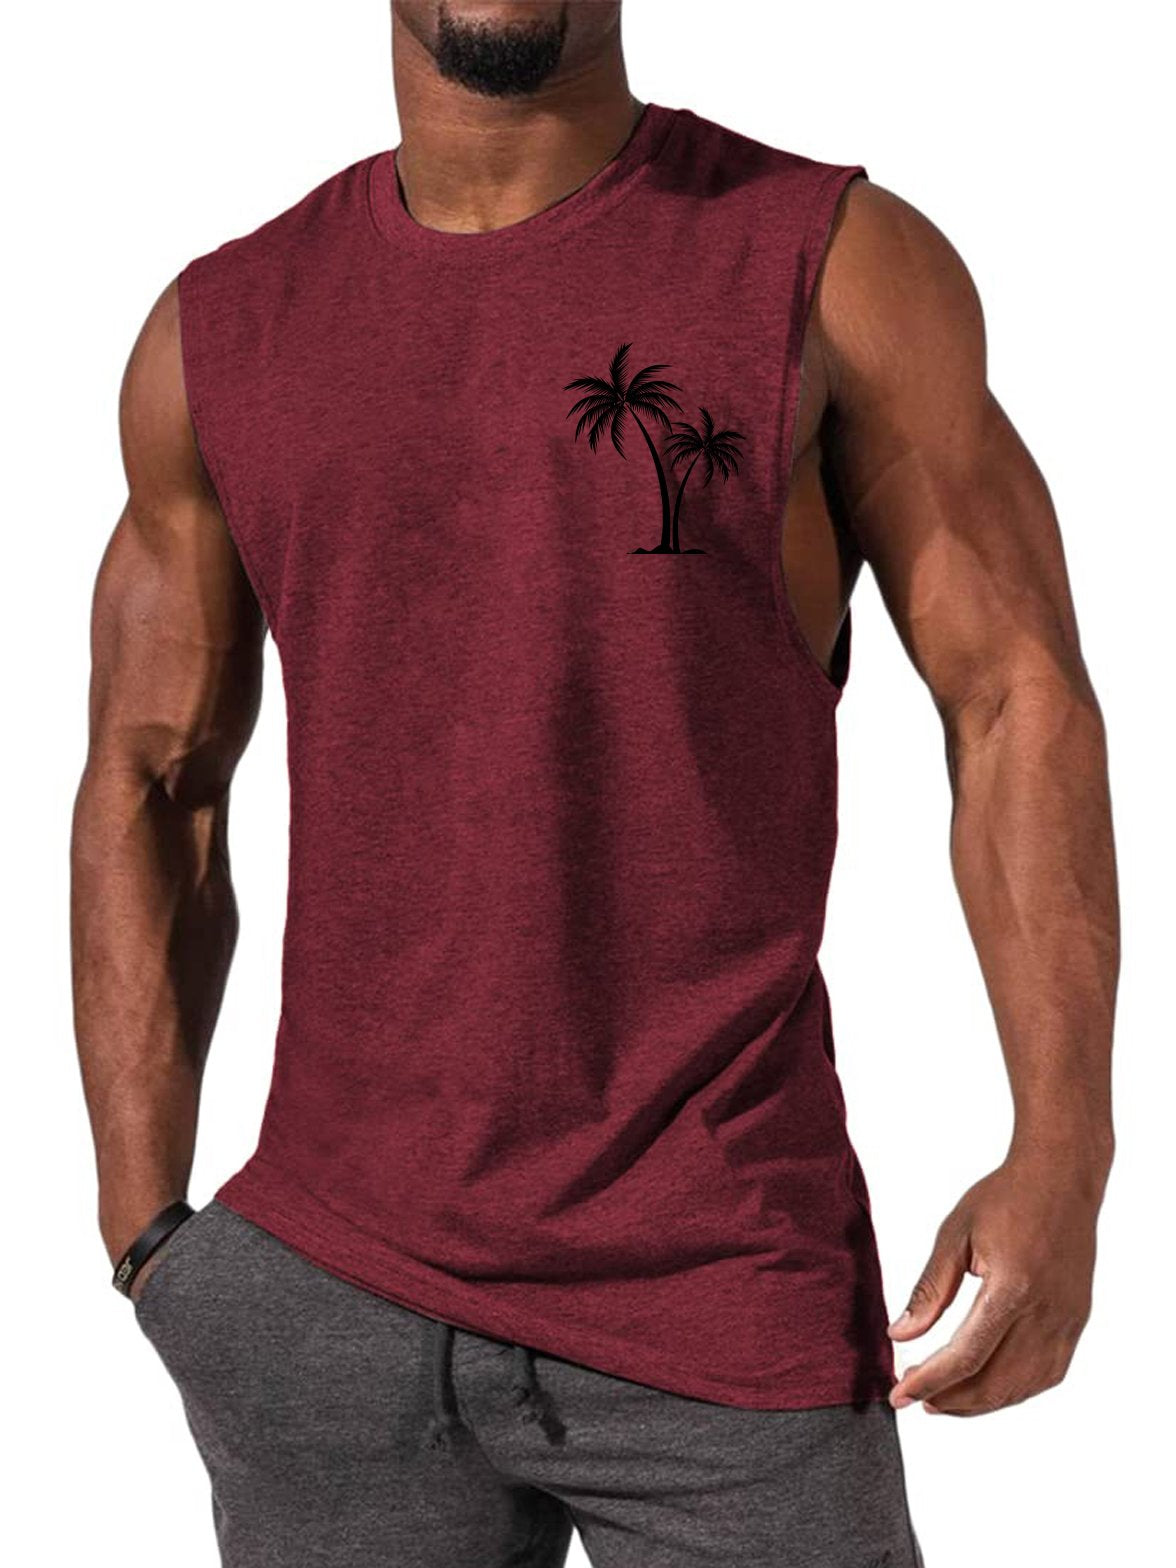 Men's Hawaiian Shirt Coconut tree Print Casual Comfort Sleeveless ...